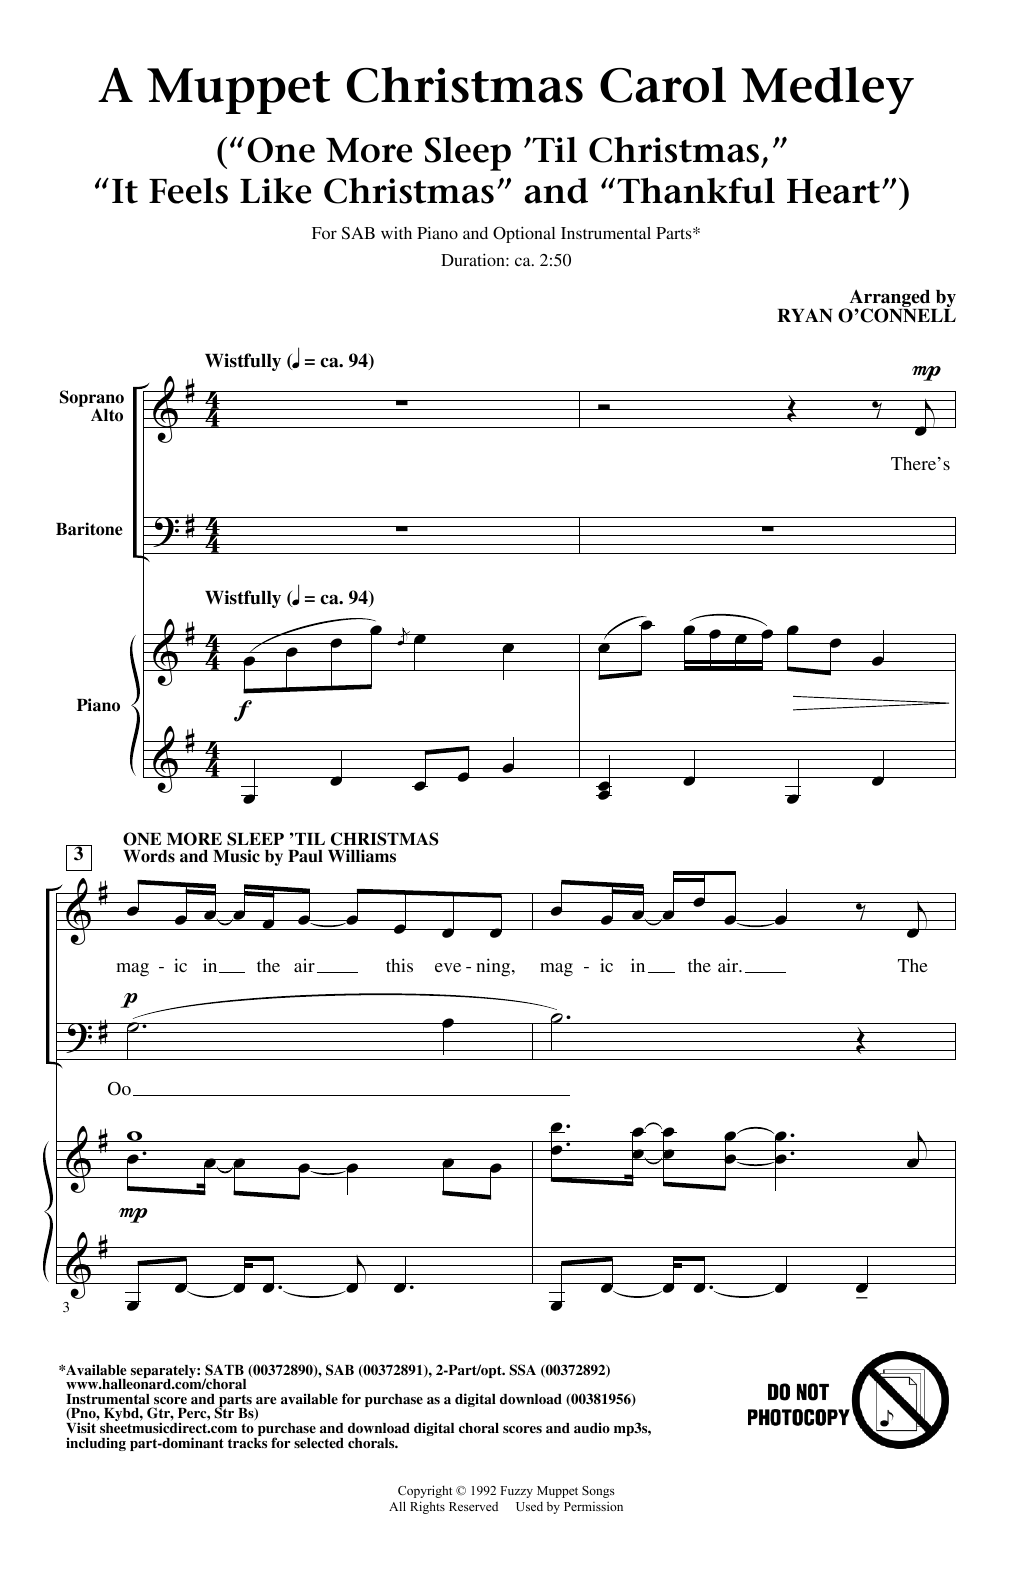 Ryan O'Connell Muppet Christmas Carol Medley (from The Muppet Christmas Carol) sheet music notes and chords arranged for SAB Choir